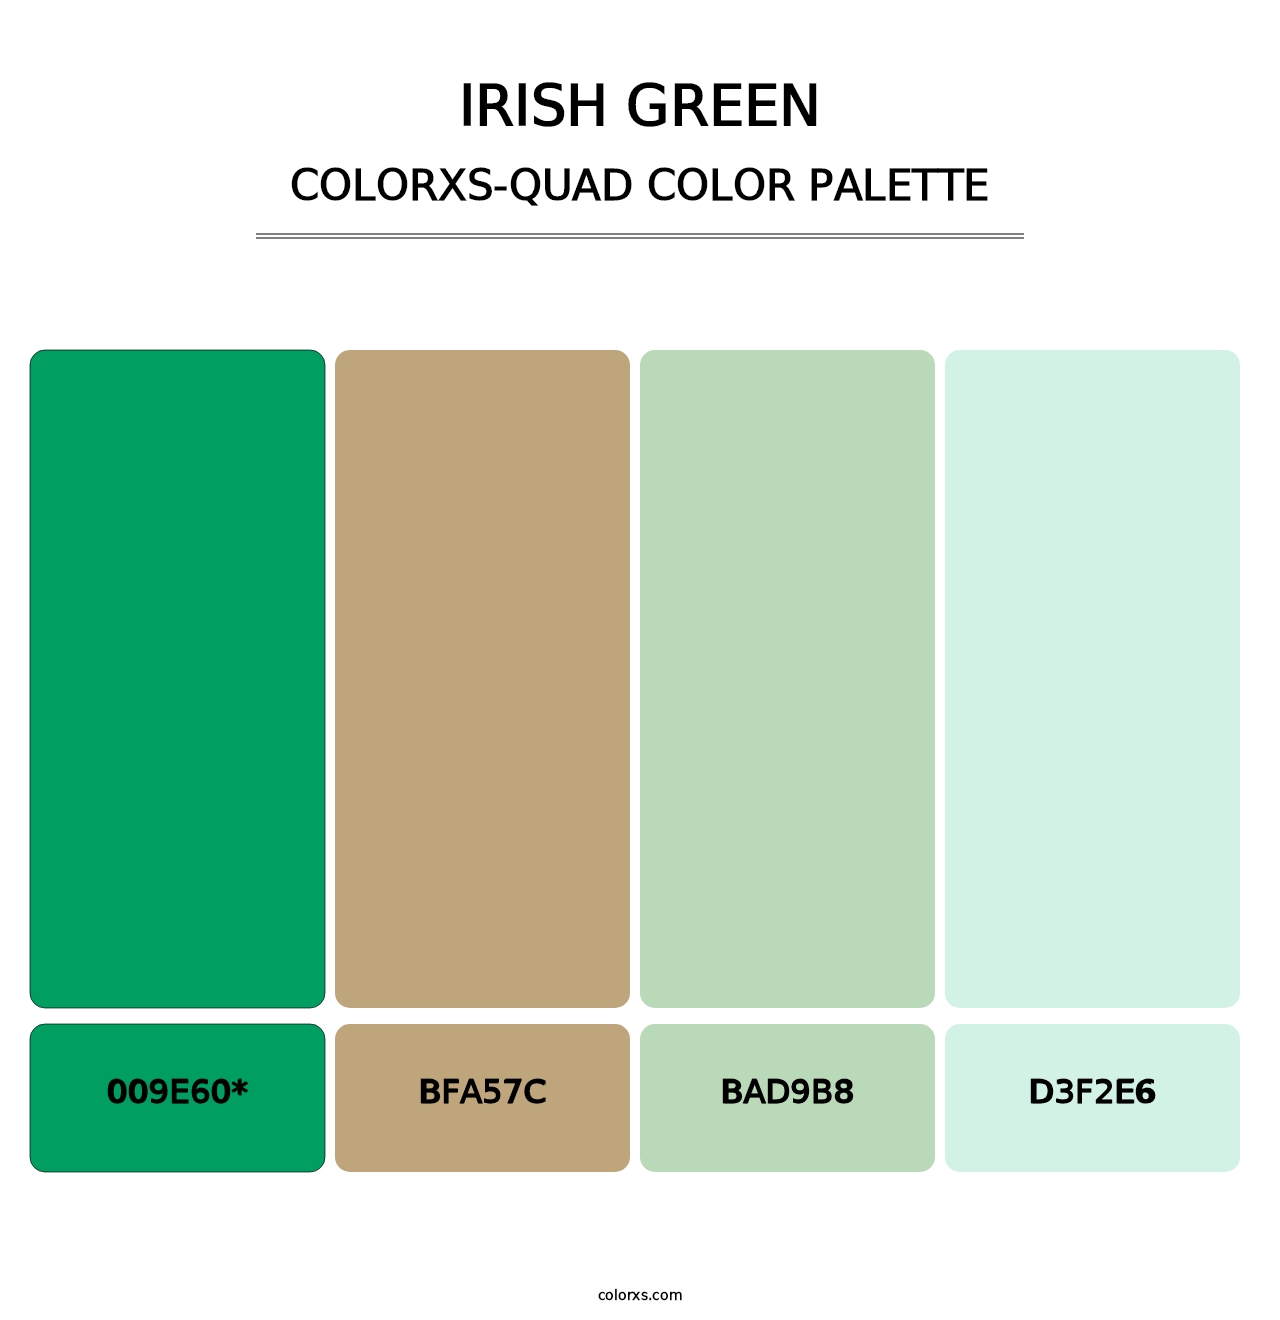 Irish Green - Colorxs Quad Palette